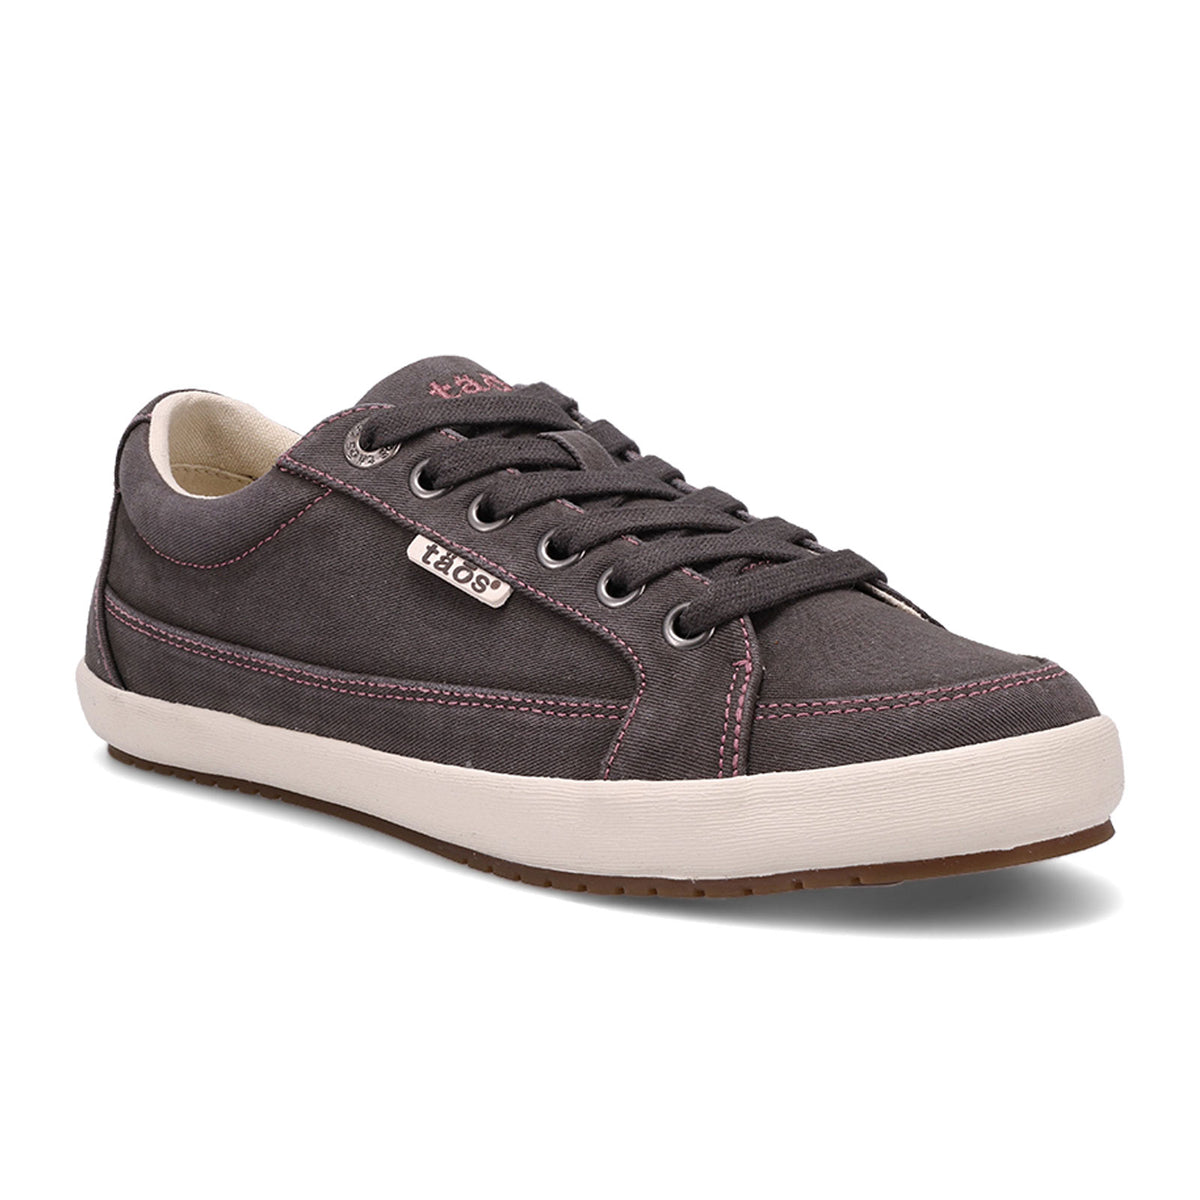 Taos Moc Star 2 Sneaker (Women) - Graphite Distressed – The Heel Shoe ...